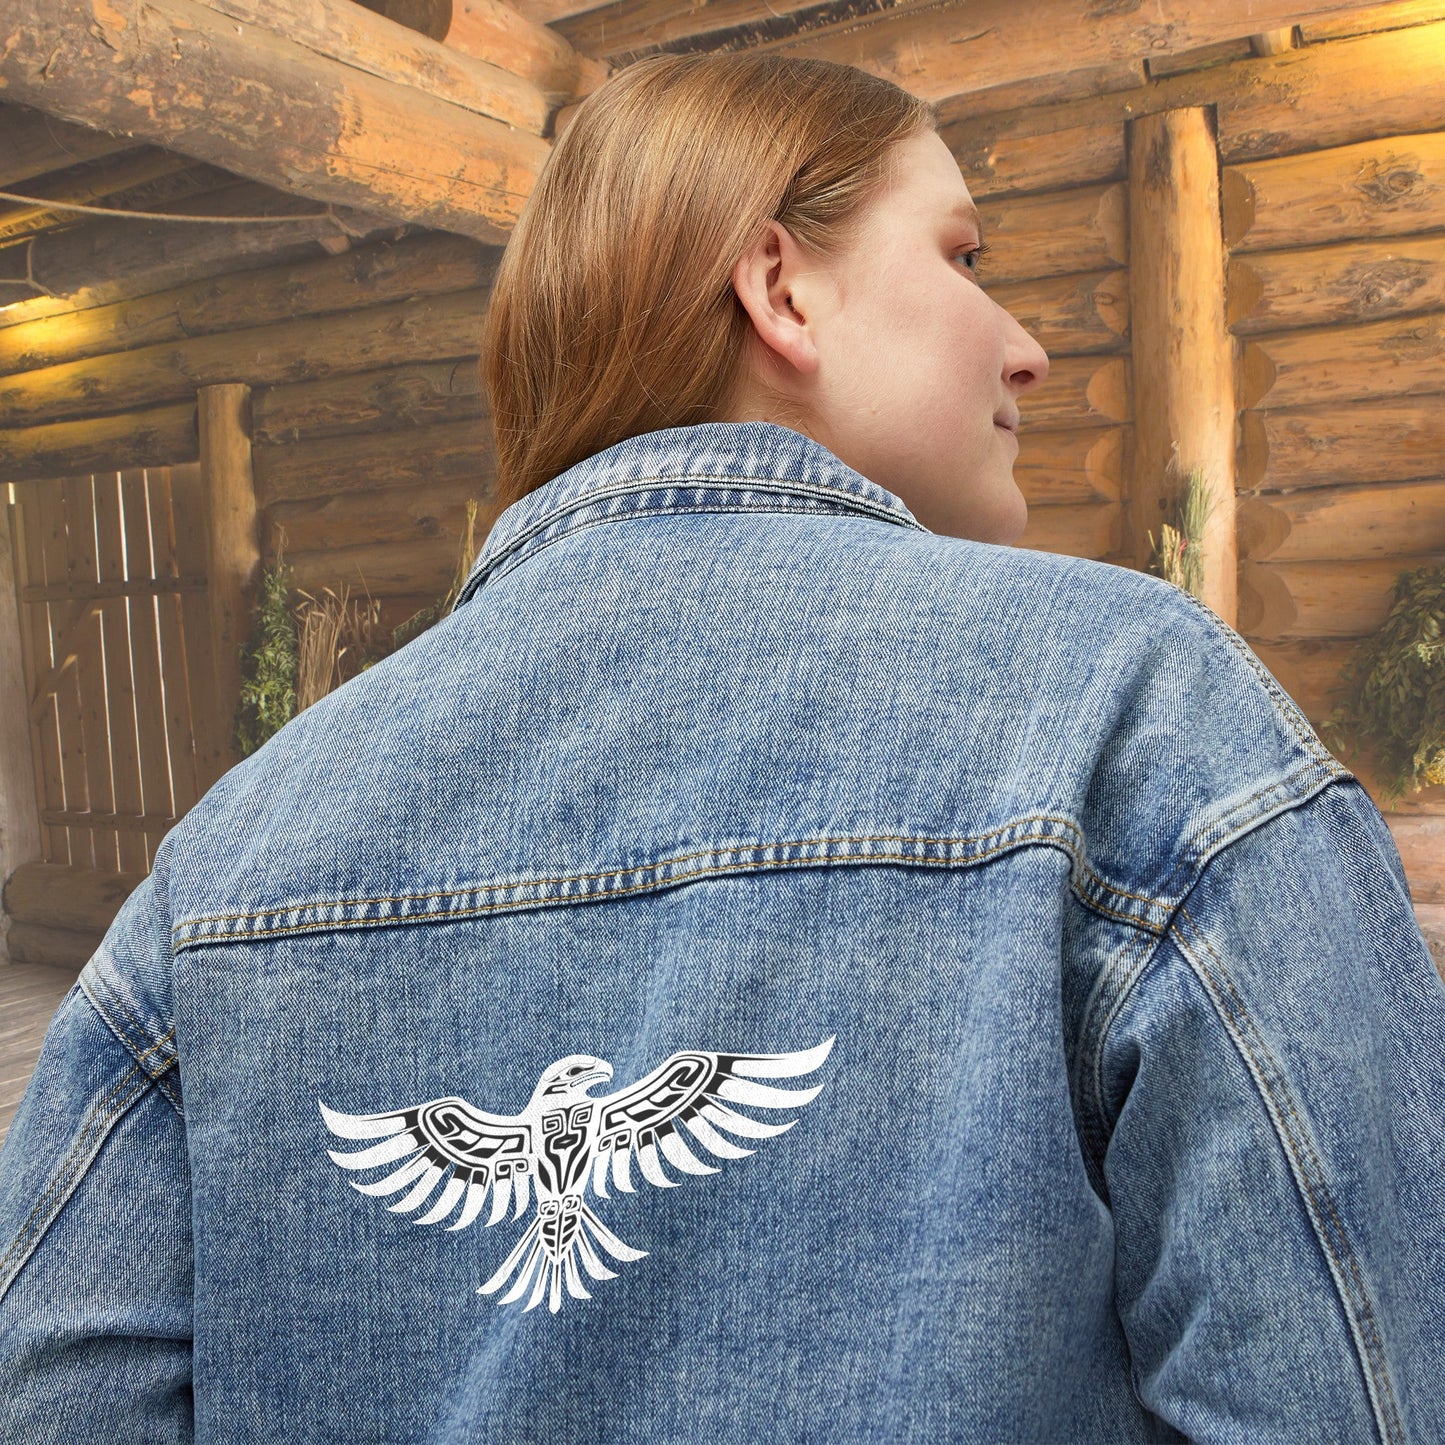 Eagle Thunderbird Jean Jacket, Cotton Denim Native American Style Spirit Animal - FlooredByArt